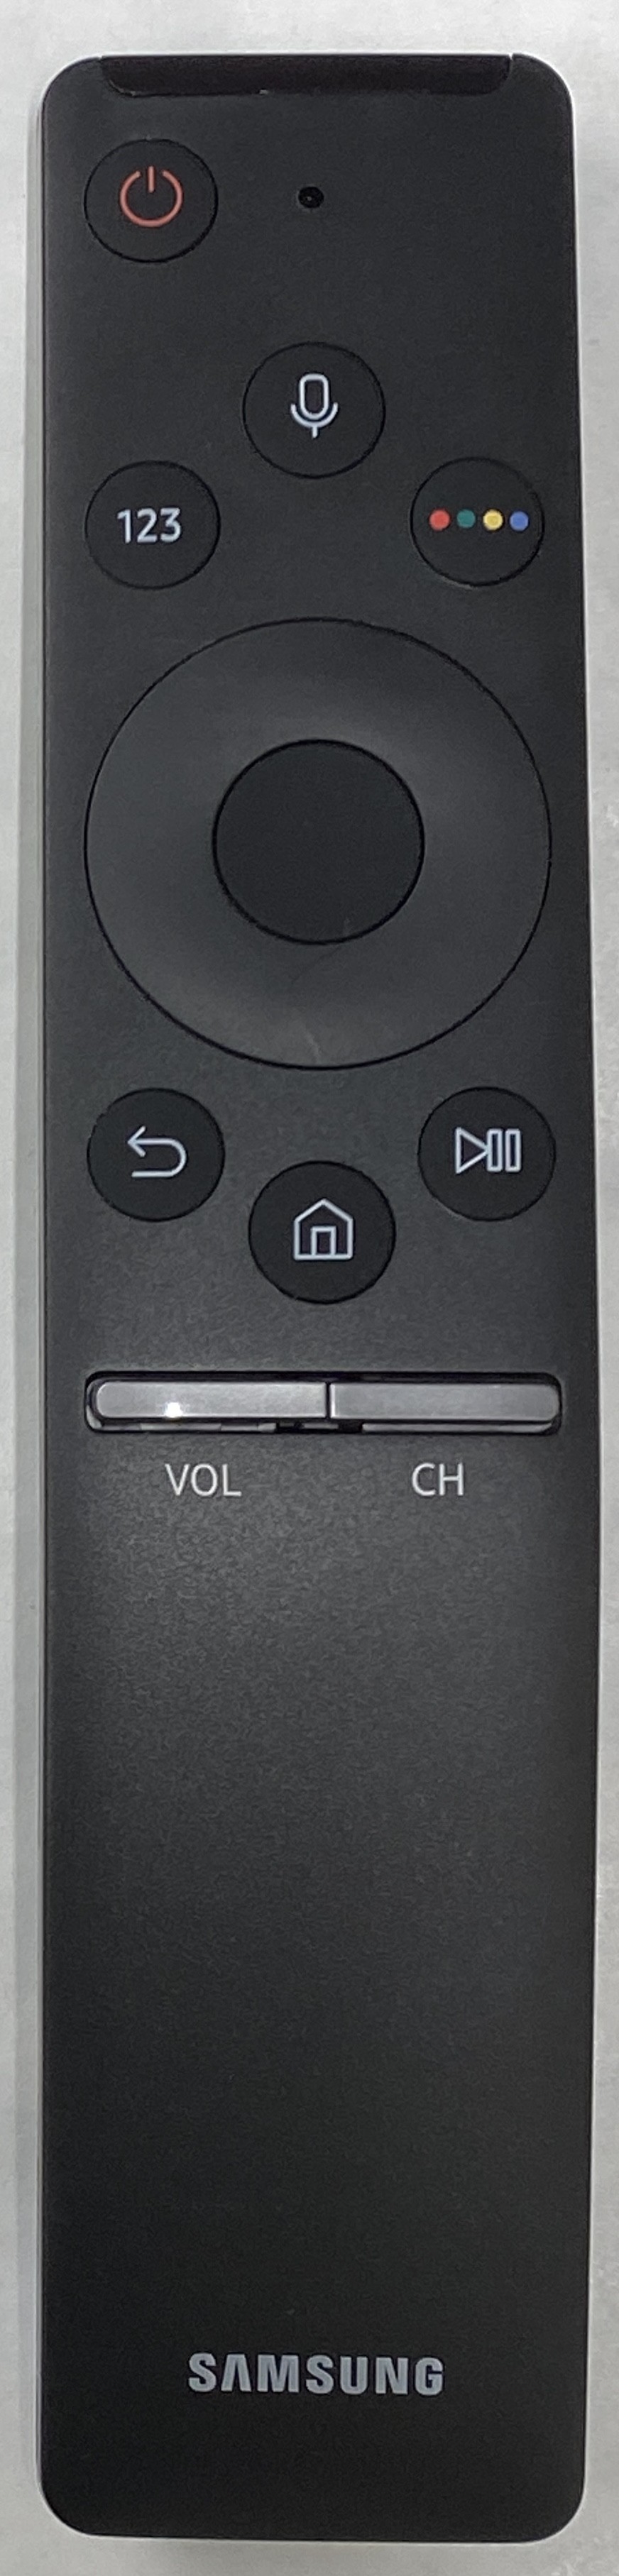 SAMSUNG UE40MU6102 Smart Remote Control Original 